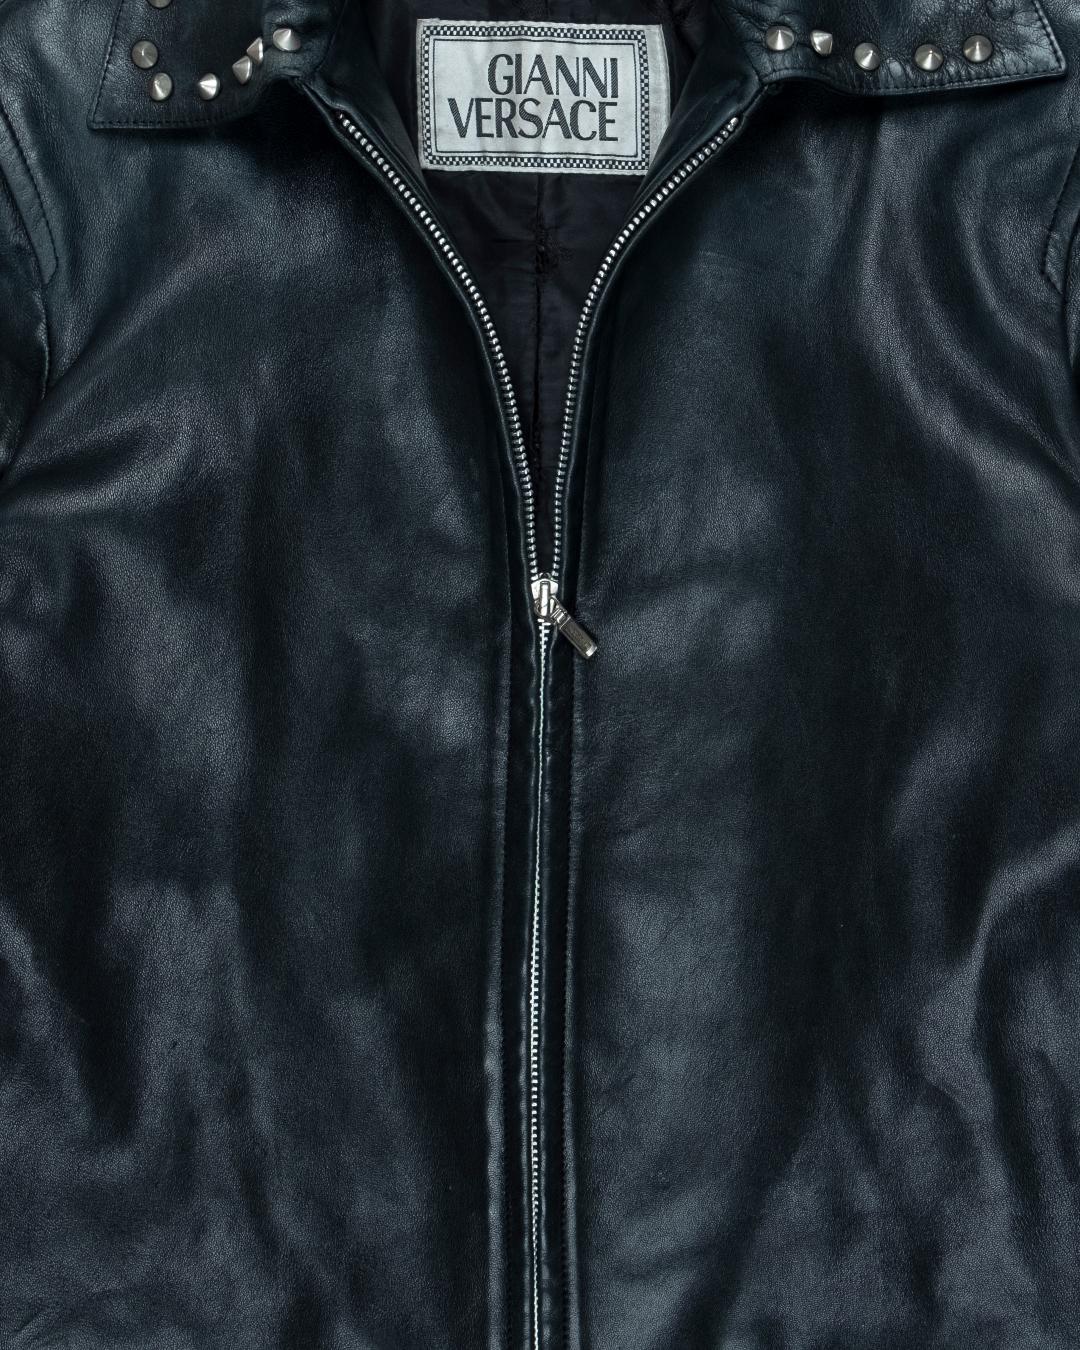 Gianni Versace Studded Leather Jacket 1